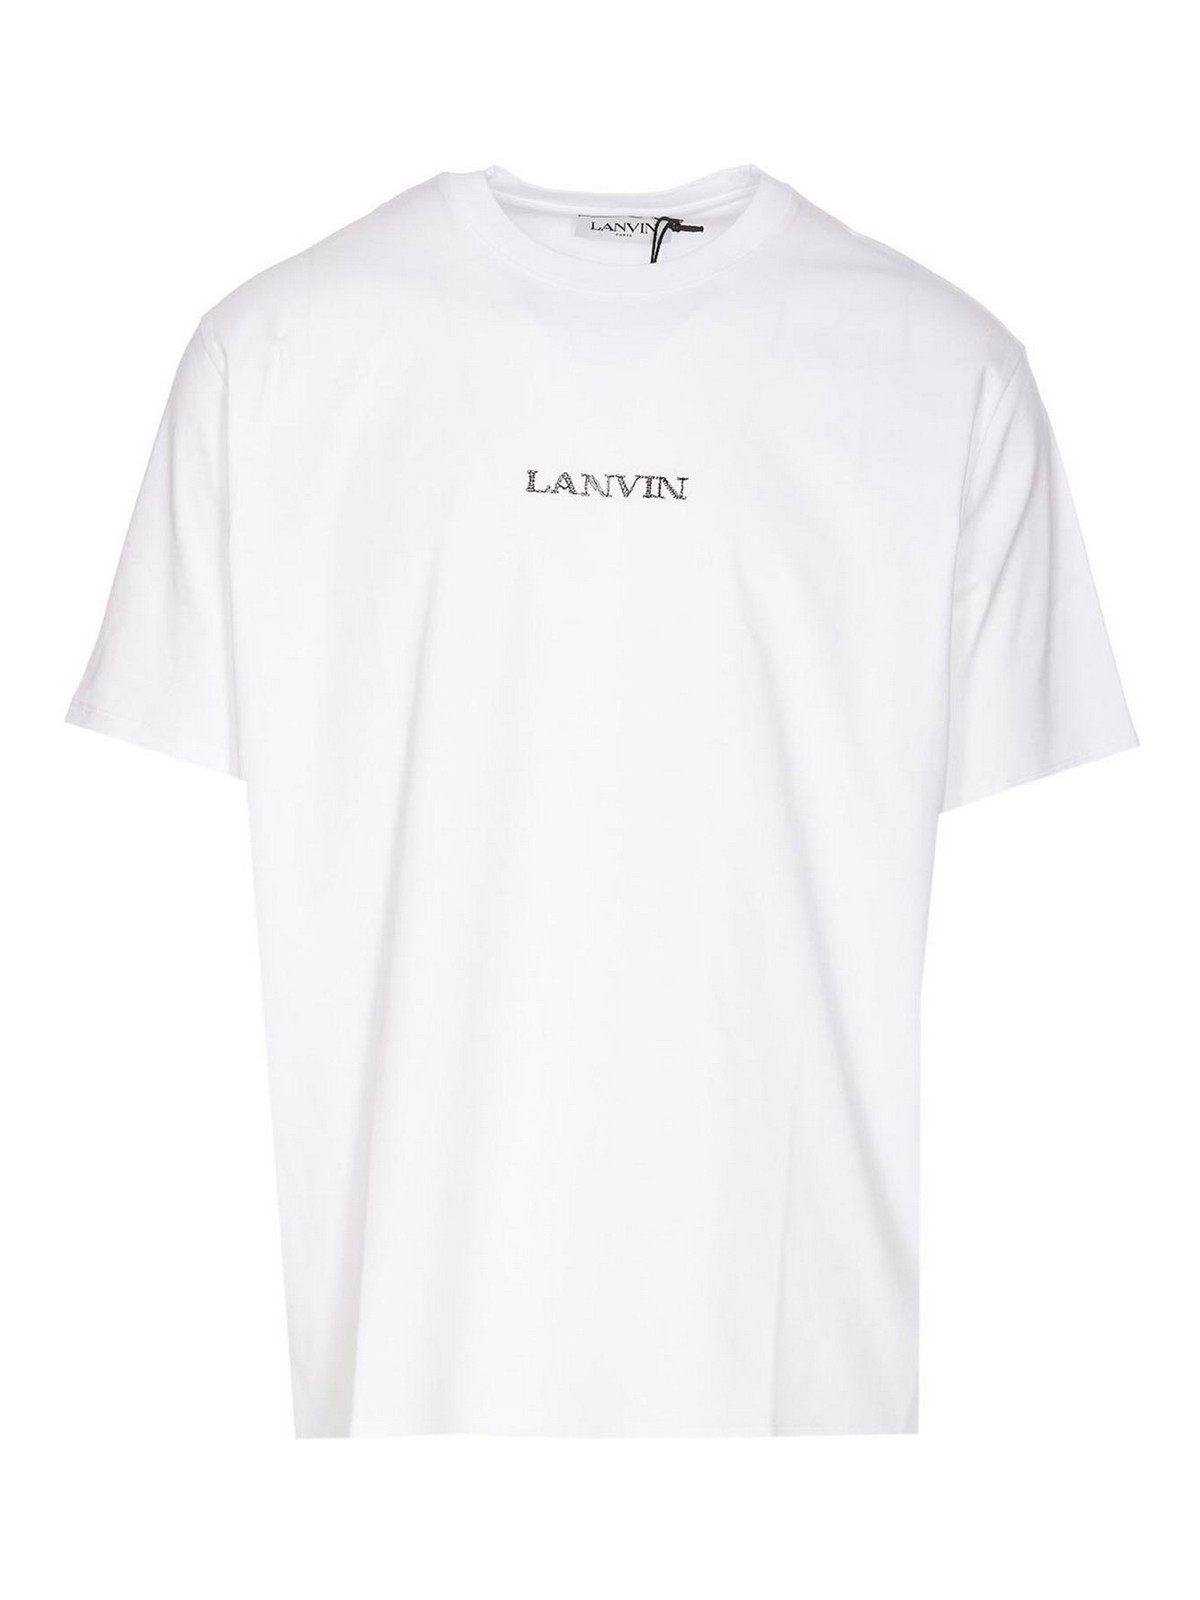 Lanvin Logo T-shirt In White